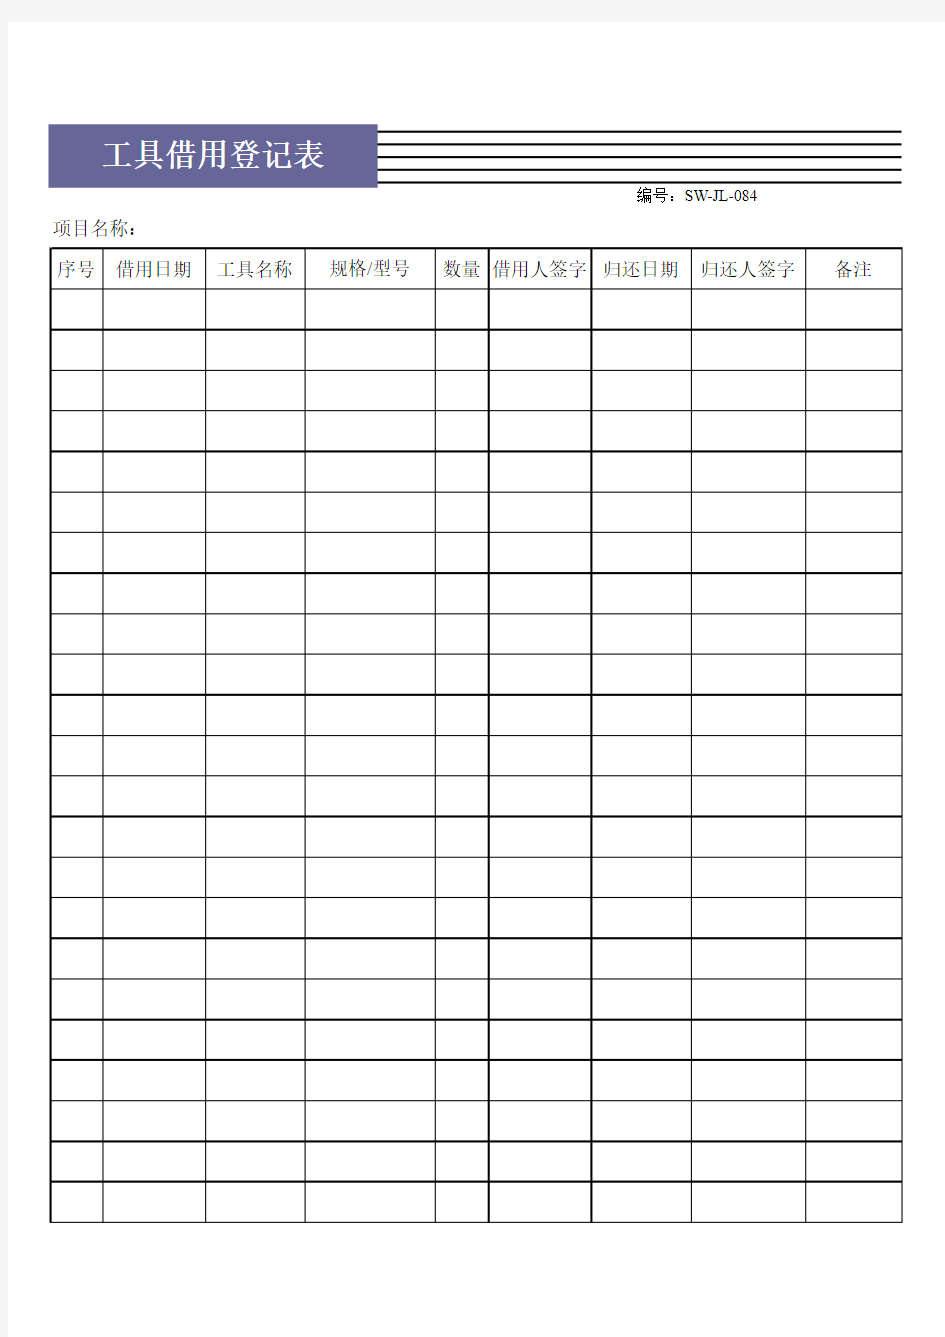 【Excel表格】工具借用登记表